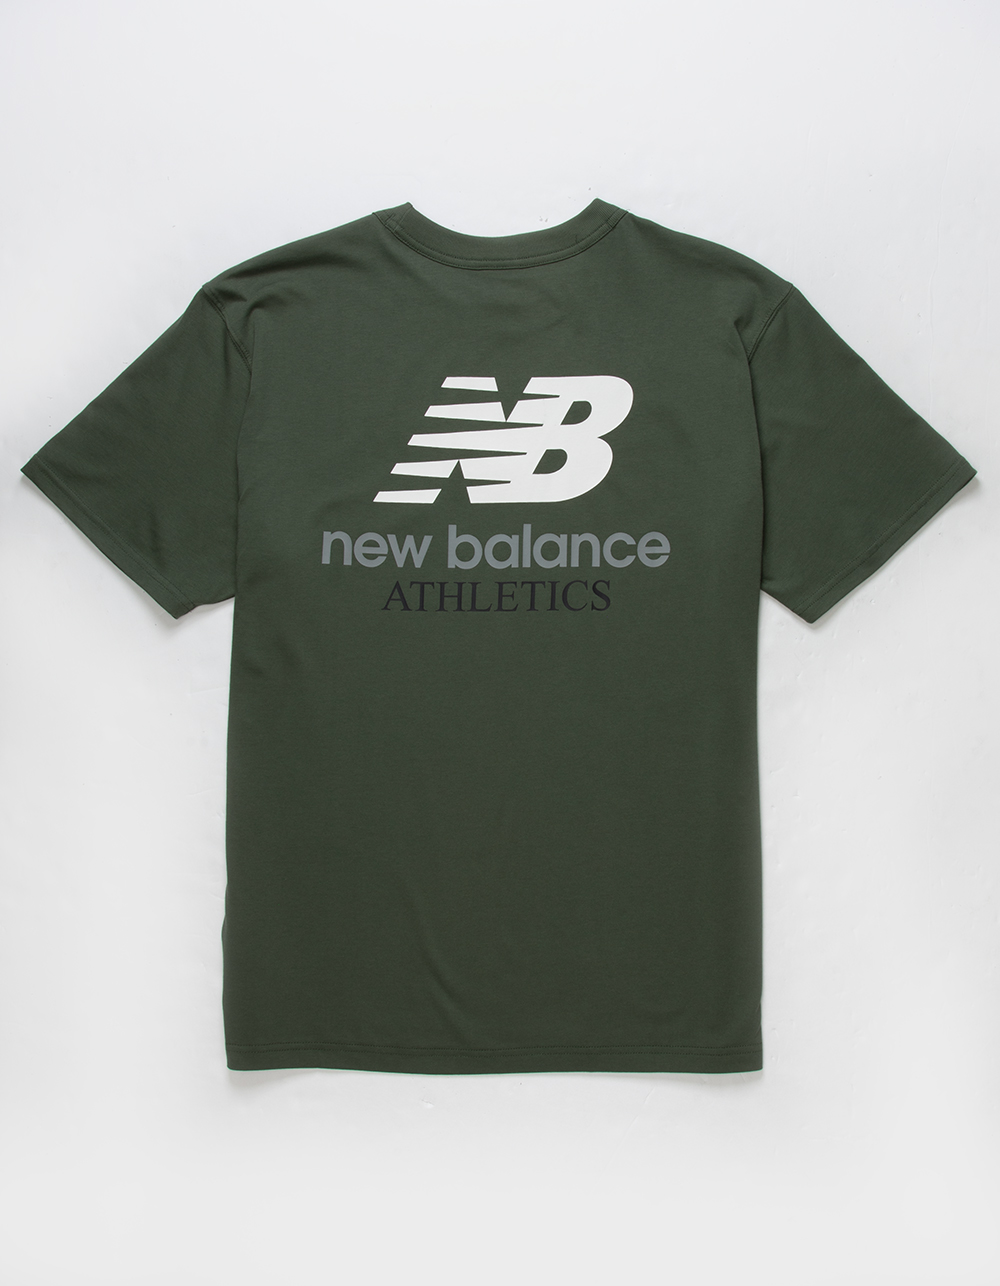 NEW BALANCE Athletics Logo Mens Tee - OLIVE | Tillys